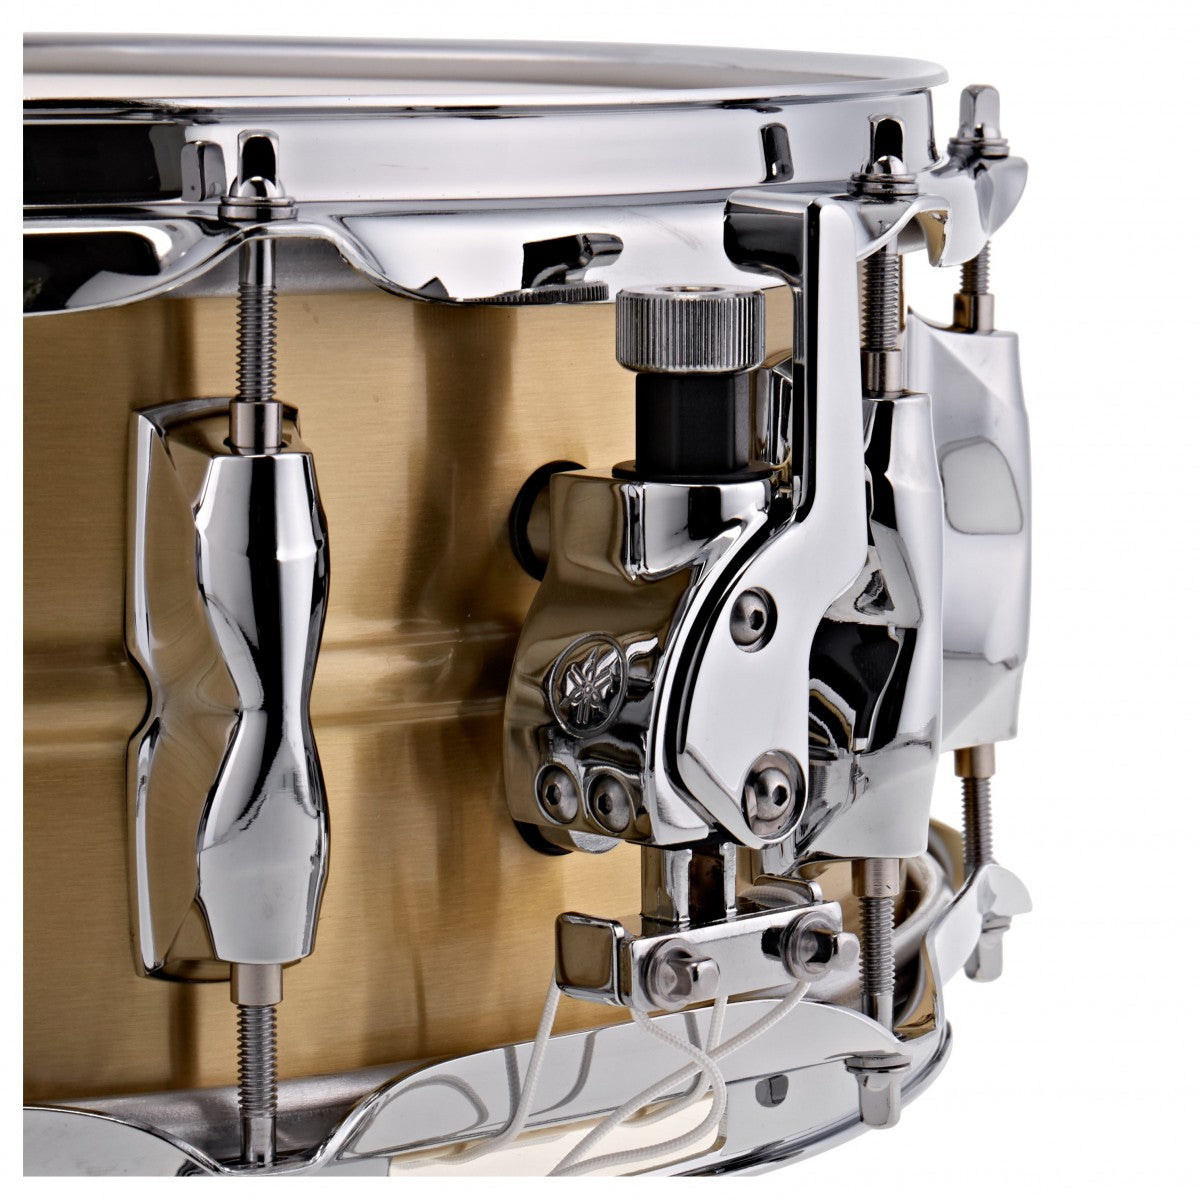 Yamaha Recording Custom 14”x5.5” Brass Snare Drum